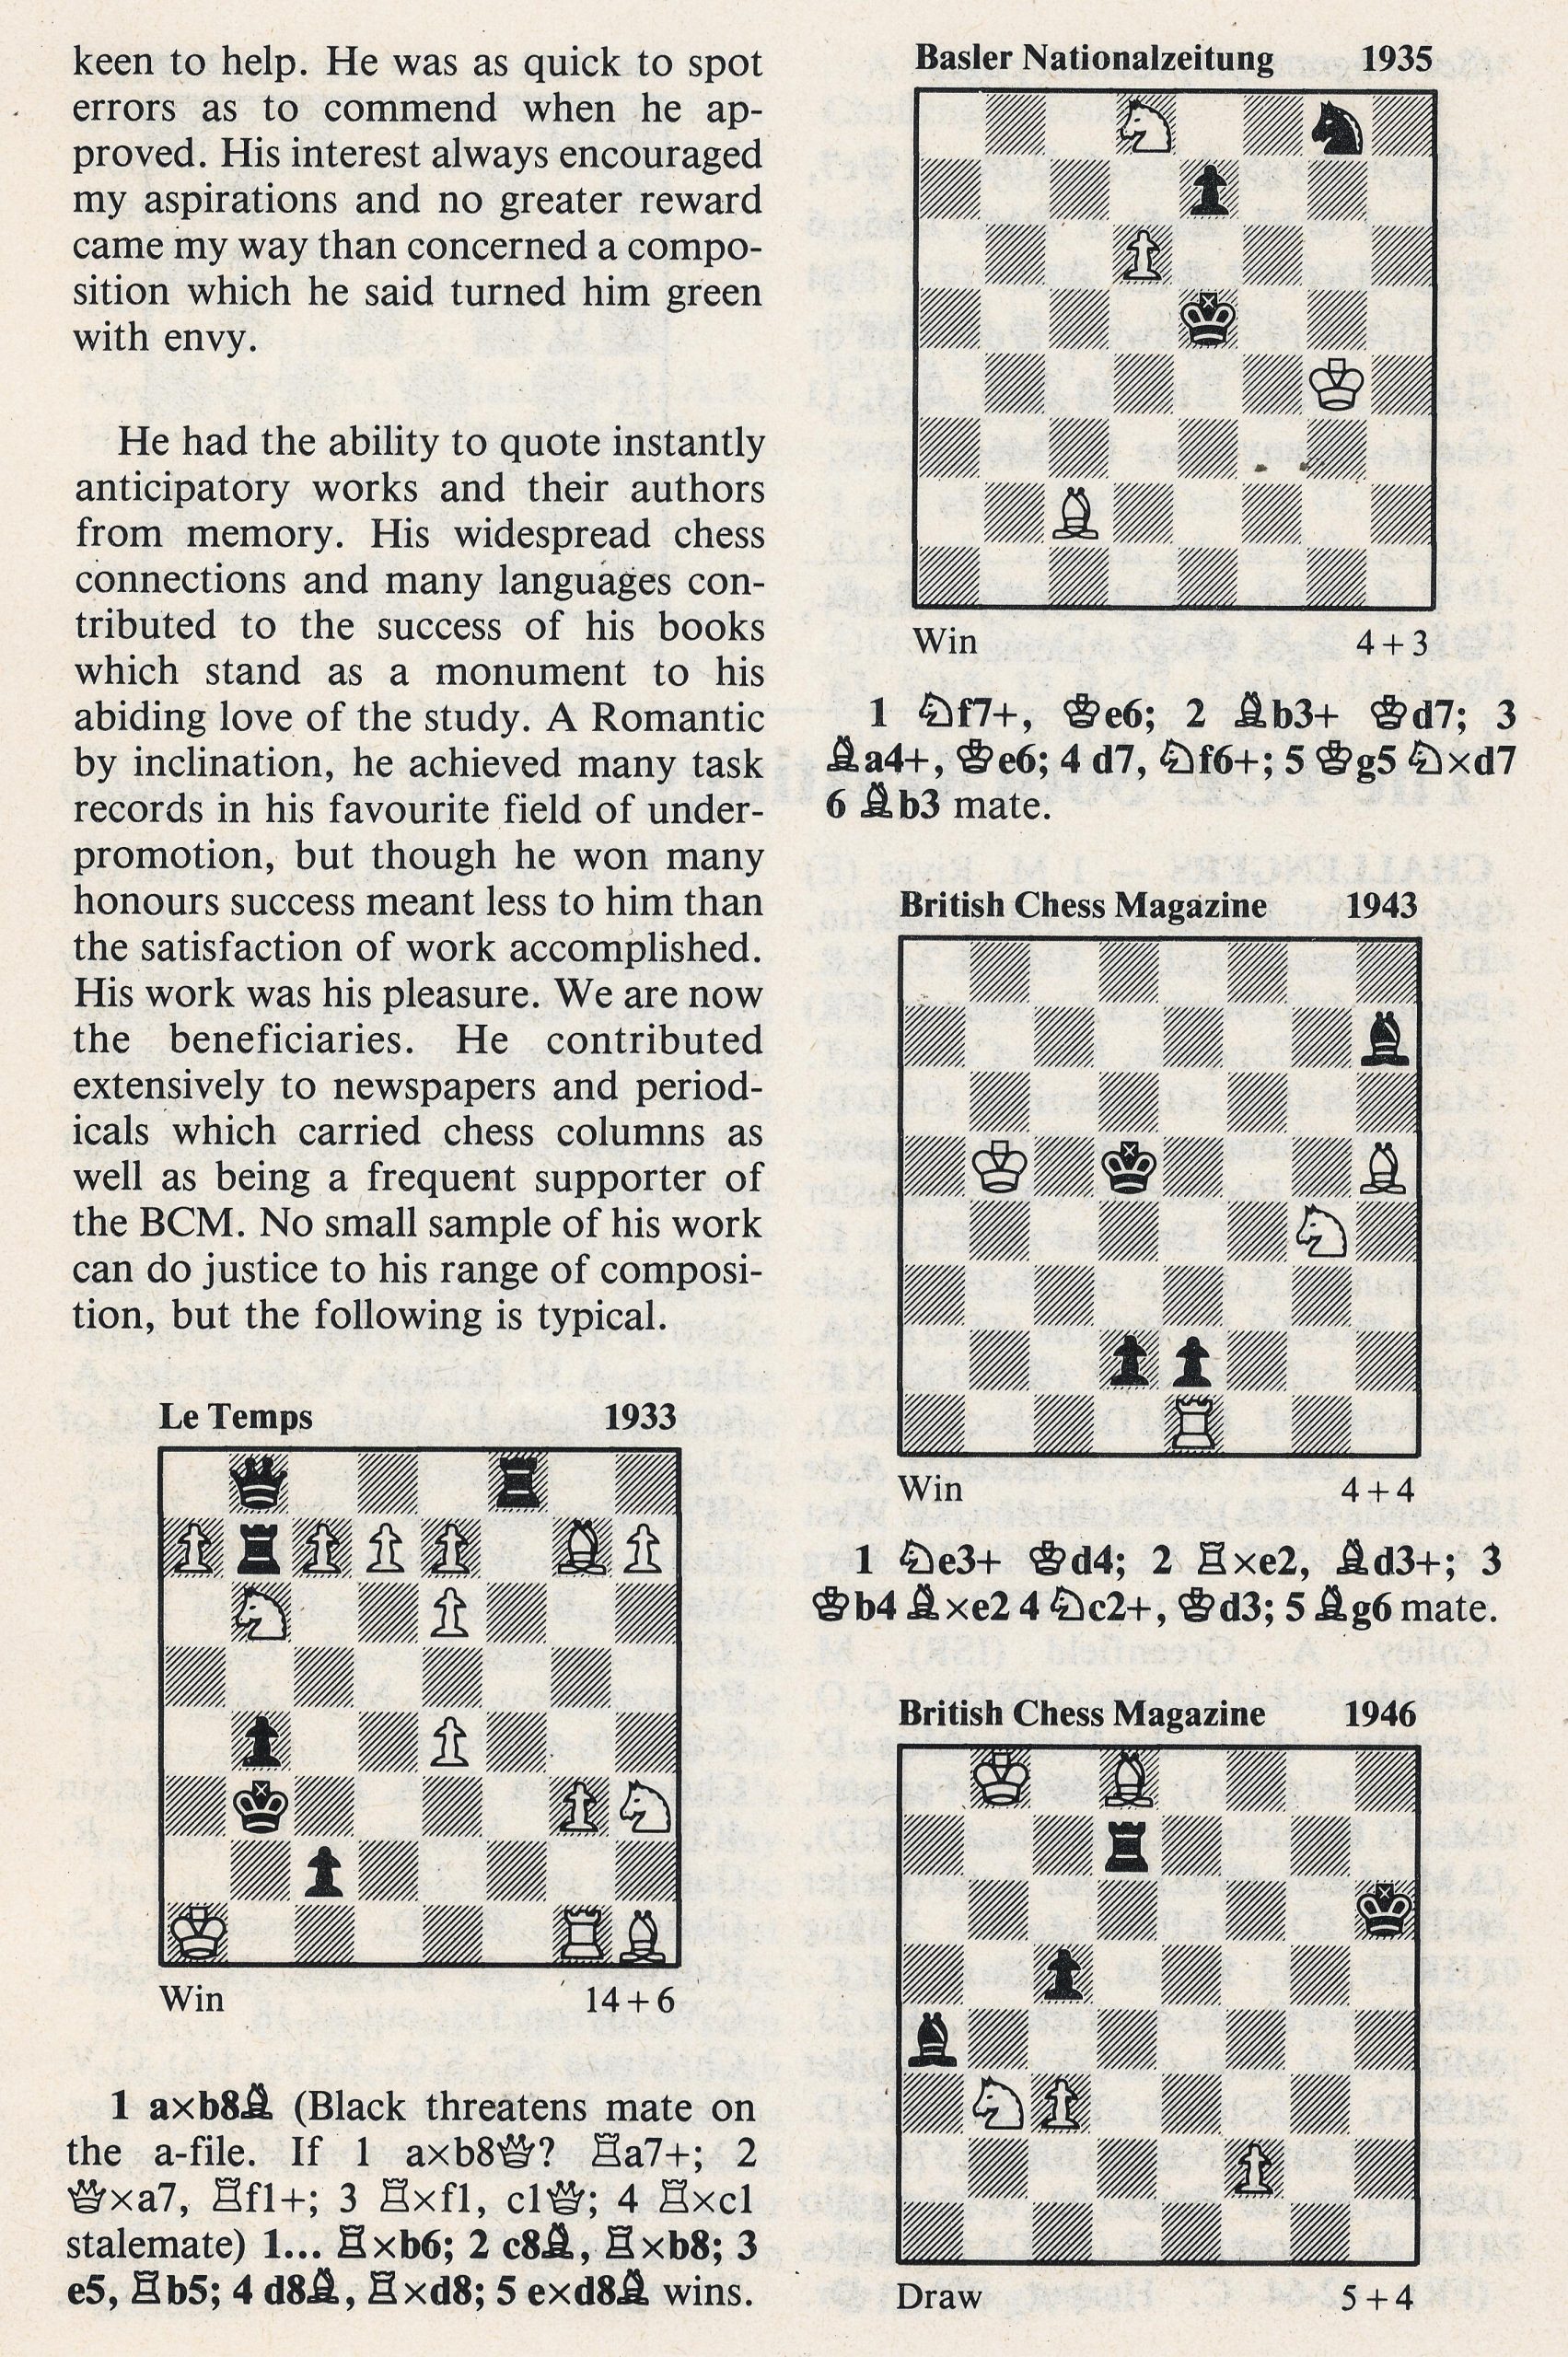 British Chess Magazine, Volume CI (101, 1981), Number 3 (March), pp. 86-88